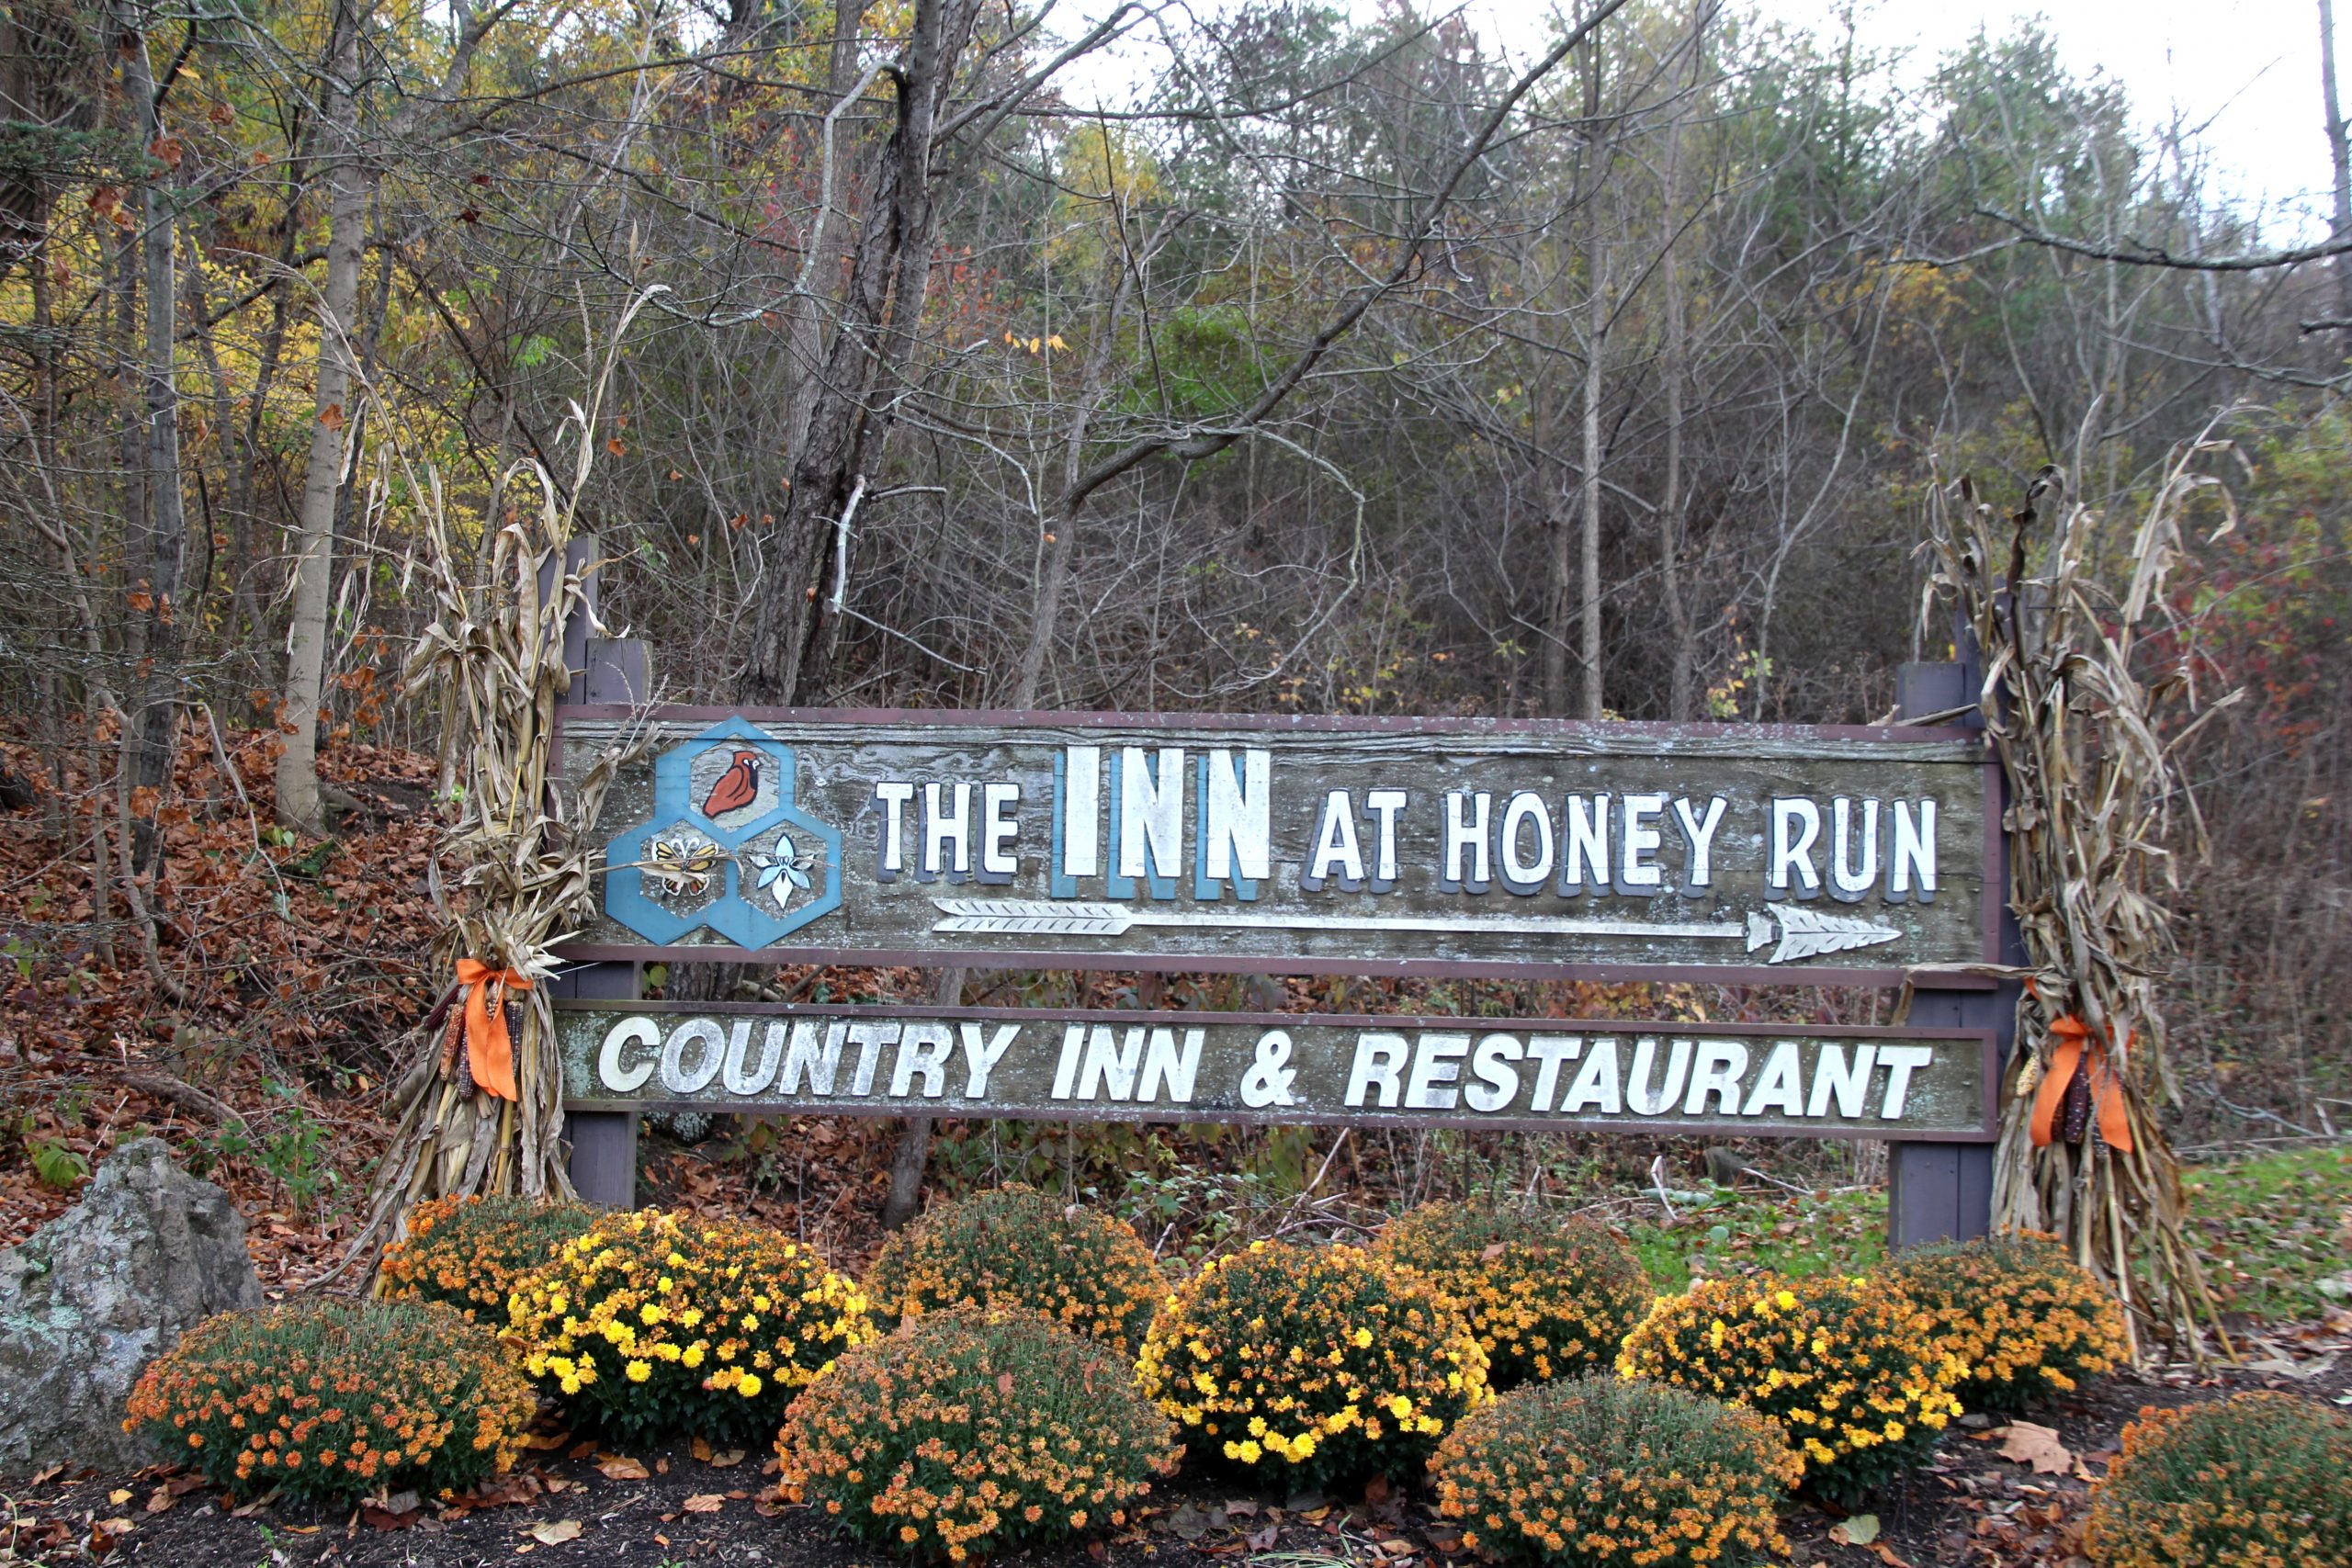 The perfect Ohio getaway at The Inn at Honey Run!